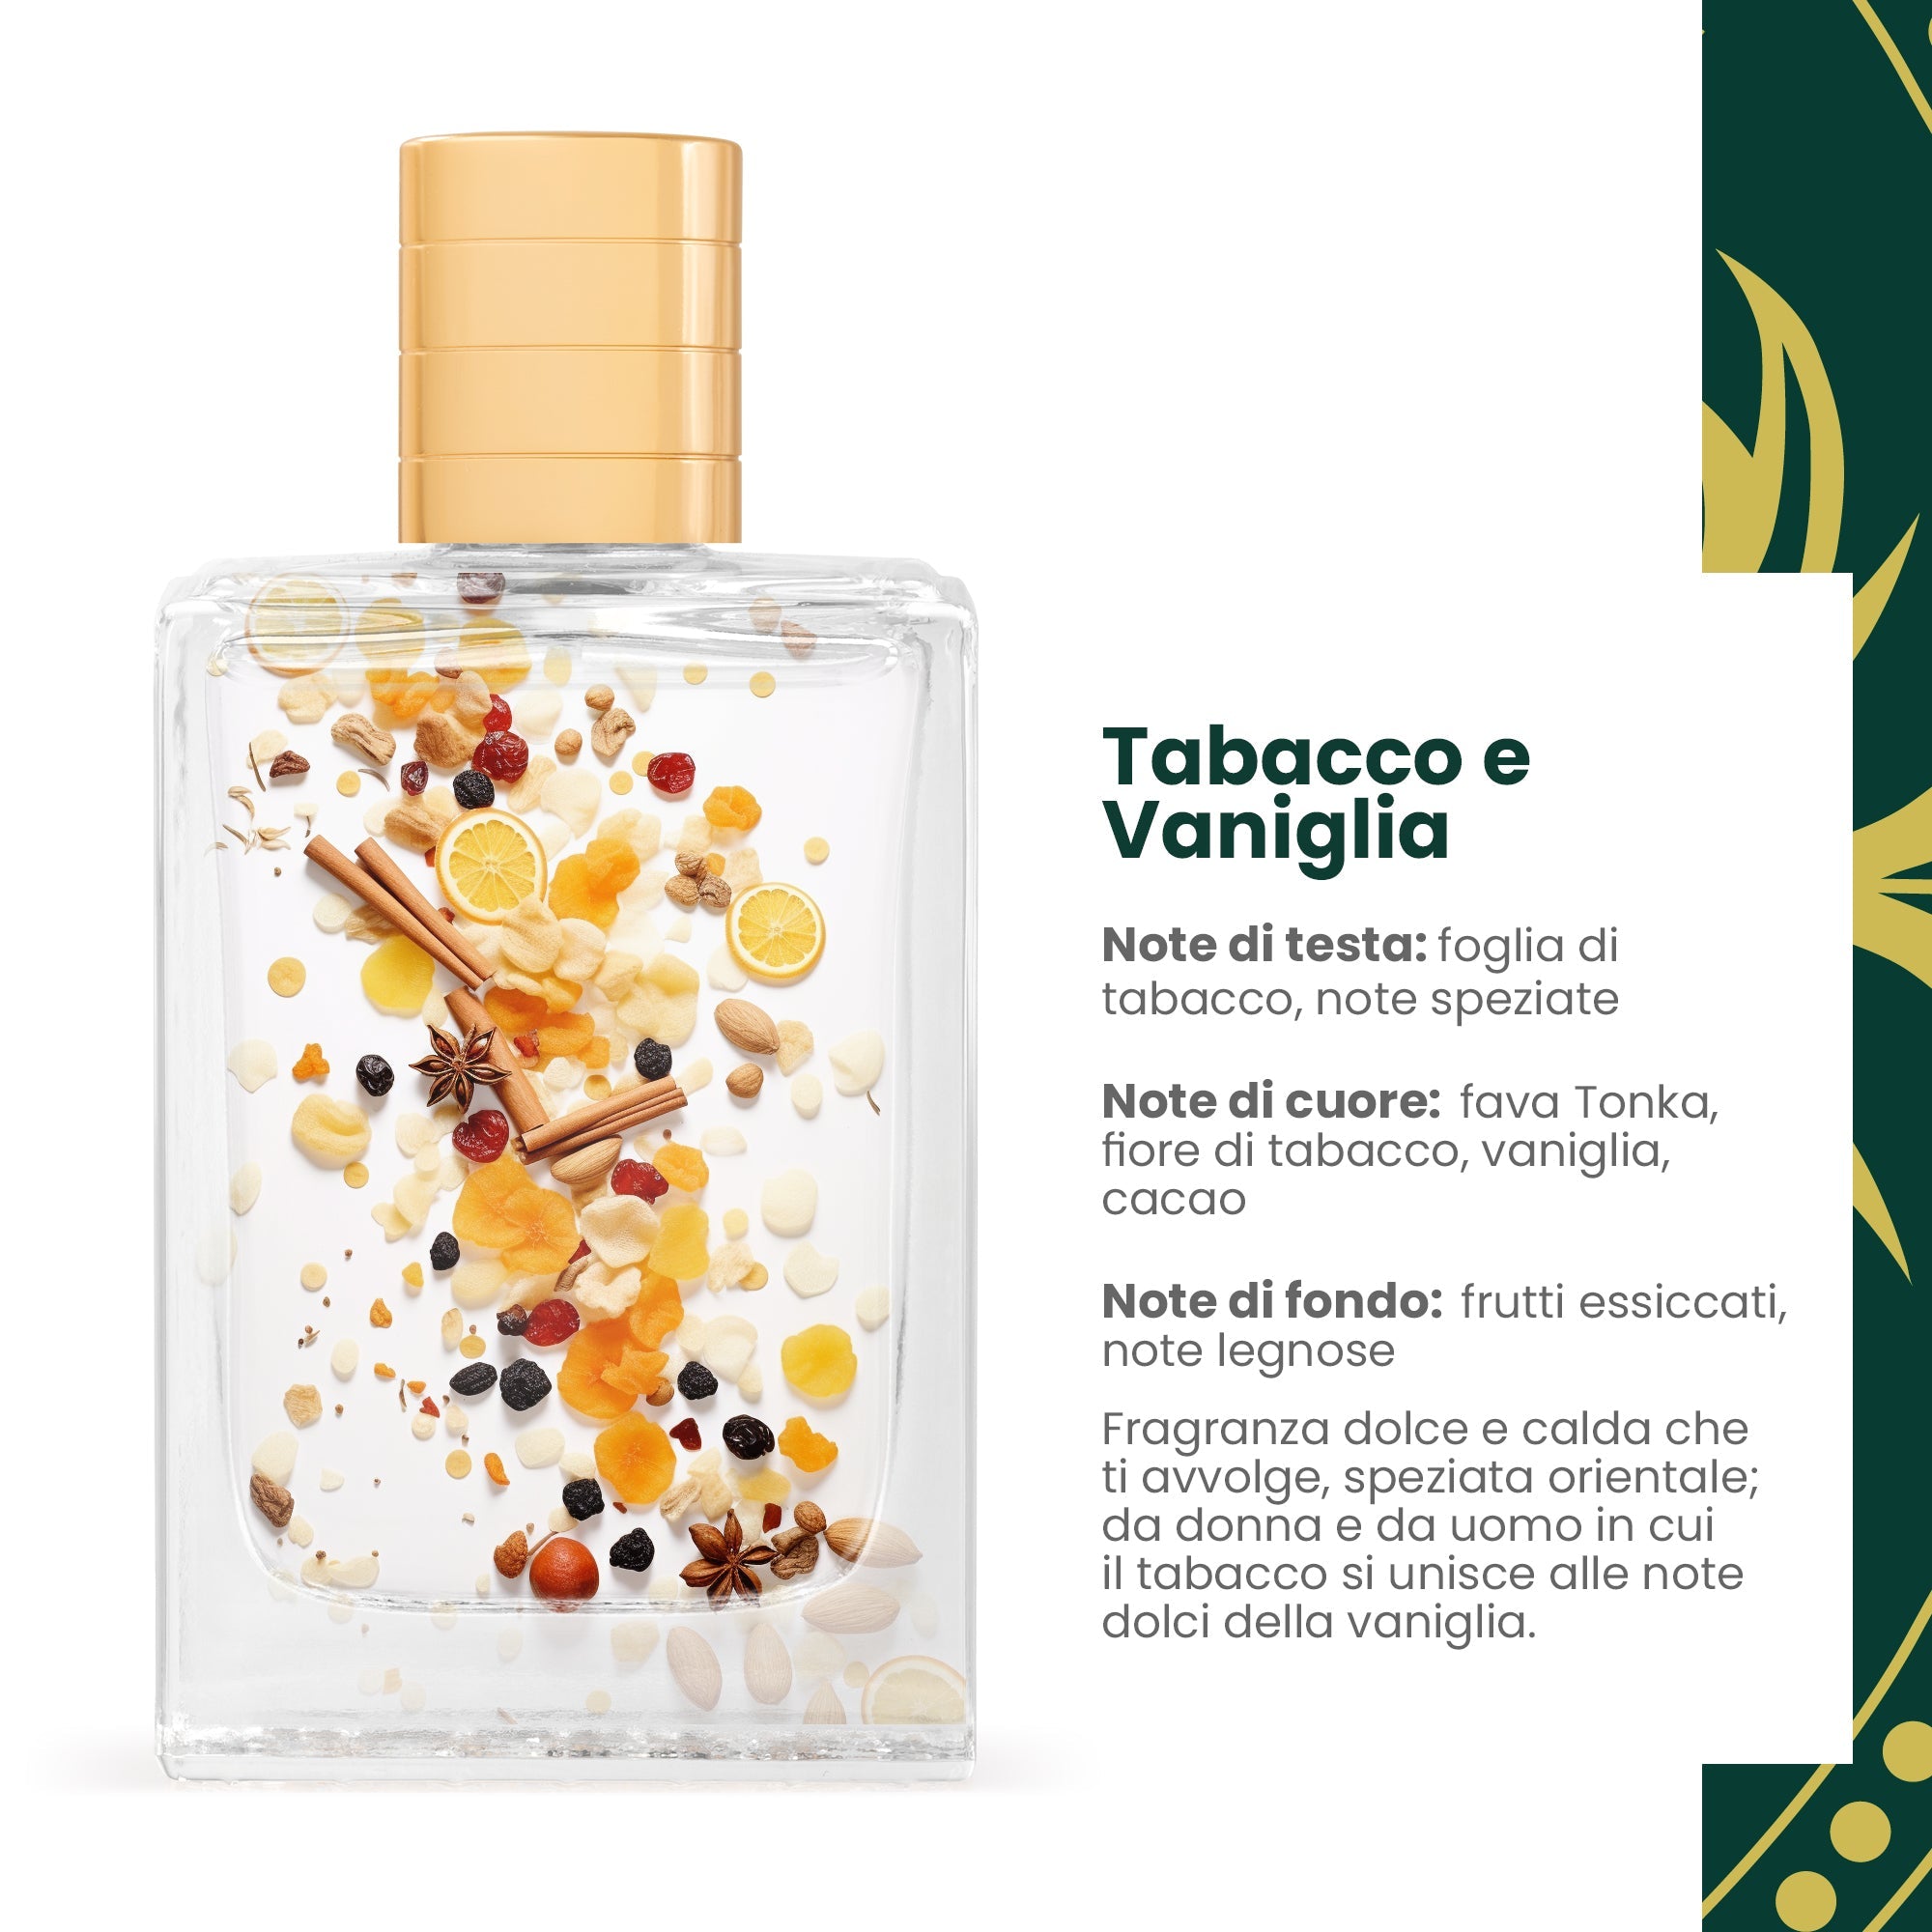 Tabacco &amp; Vaniglia - Varriale Profumi®